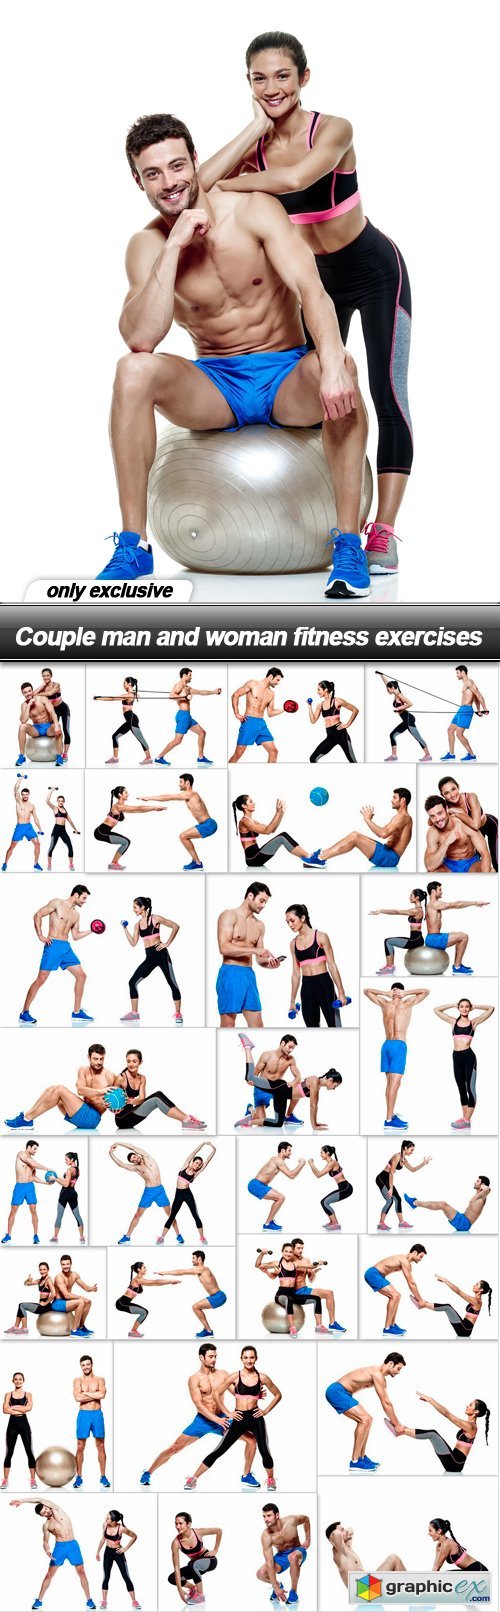 Couple man and woman fitness exercises - 28 UHQ JPEG